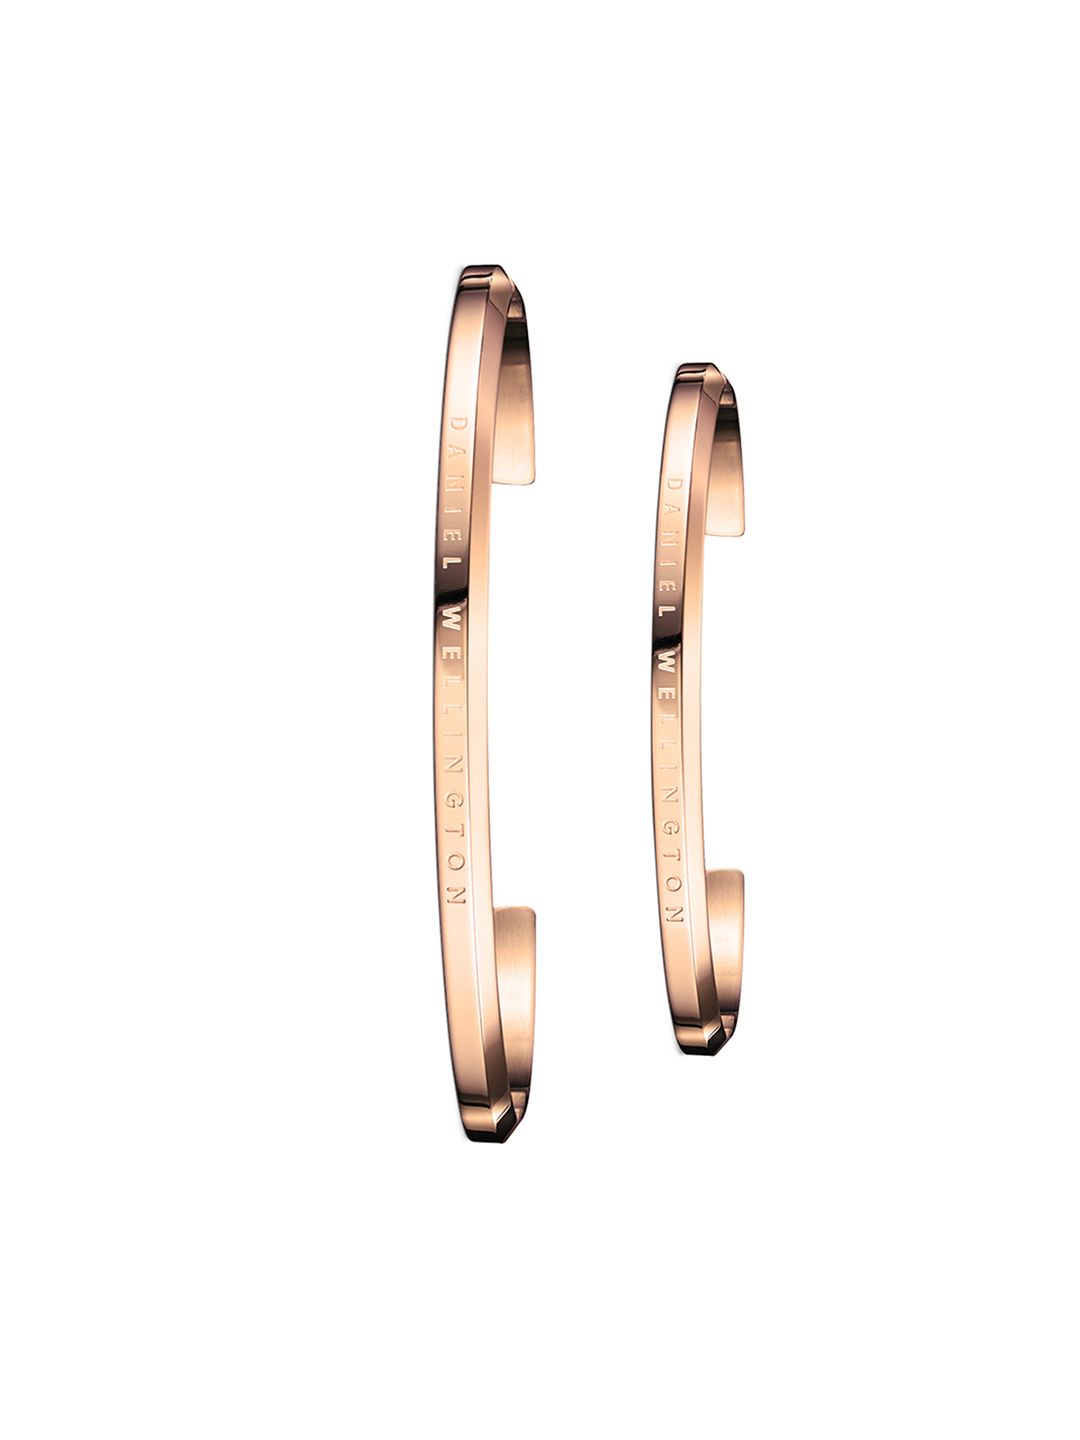 Daniel wellington Unisex Classic Rose Gold Bracelet Set - Large & Small DW00500178 Price in India